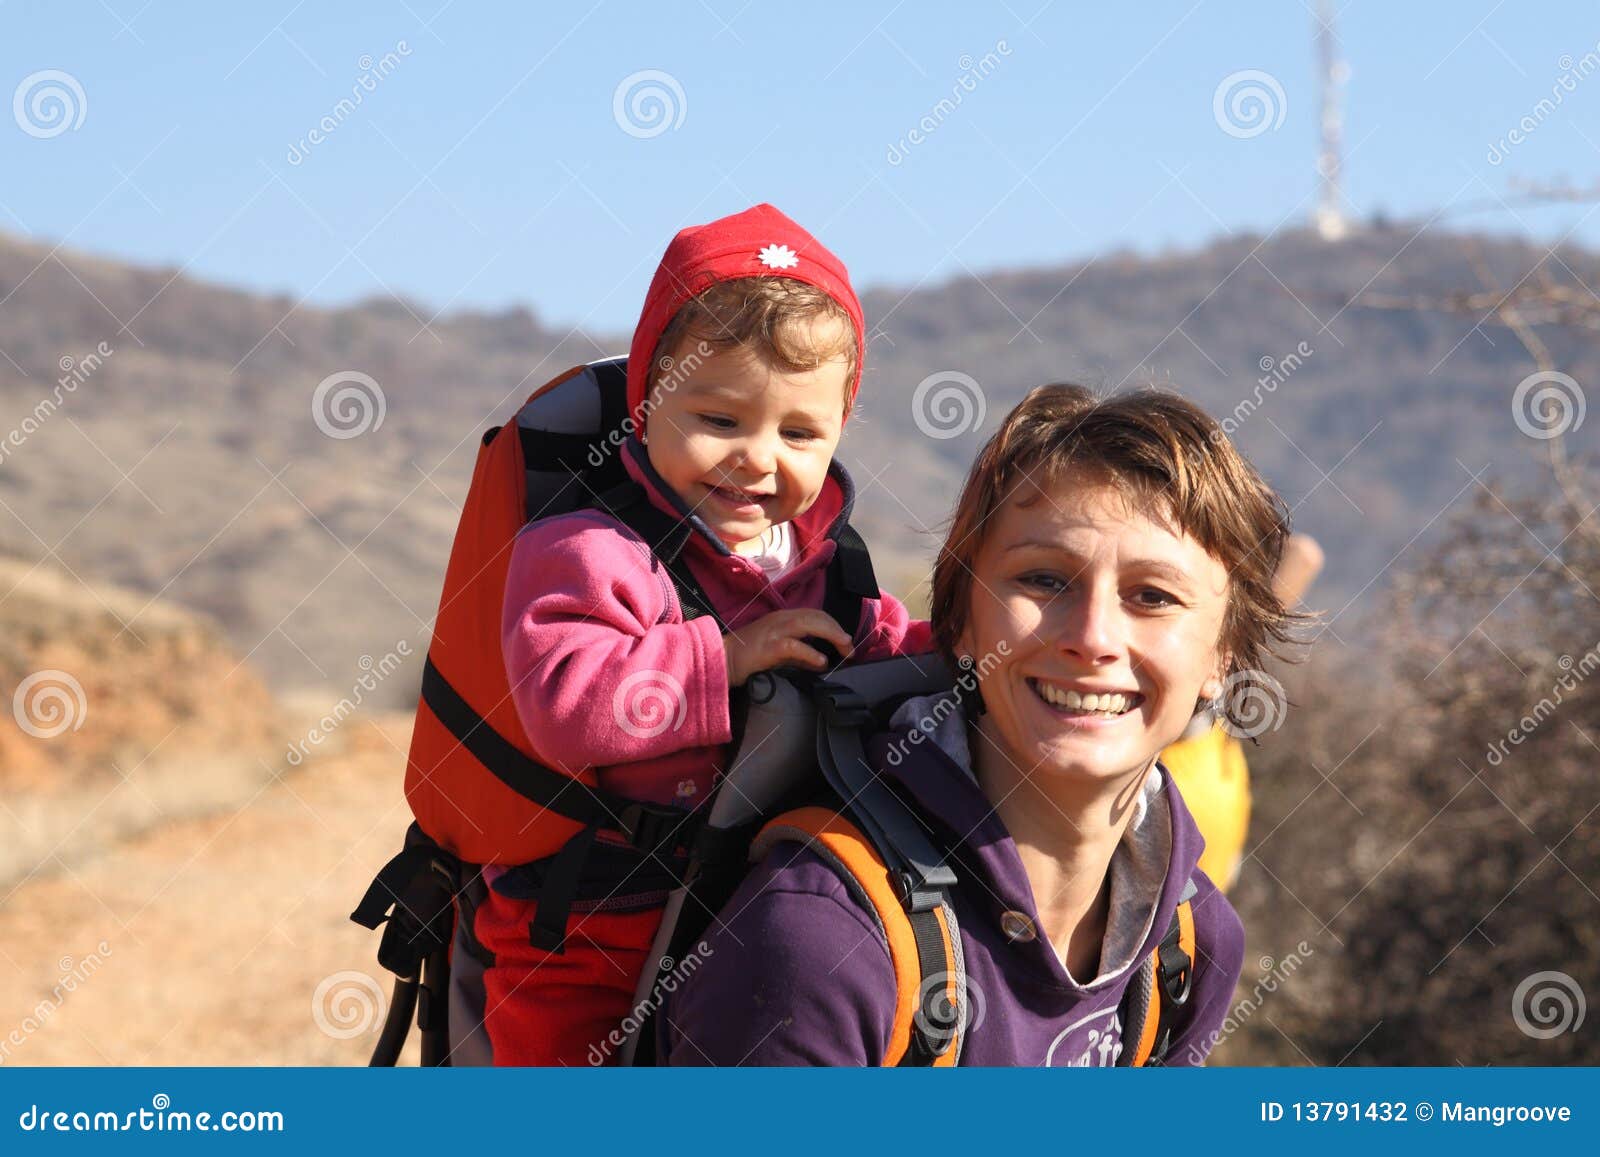 mother mom with baby trekking